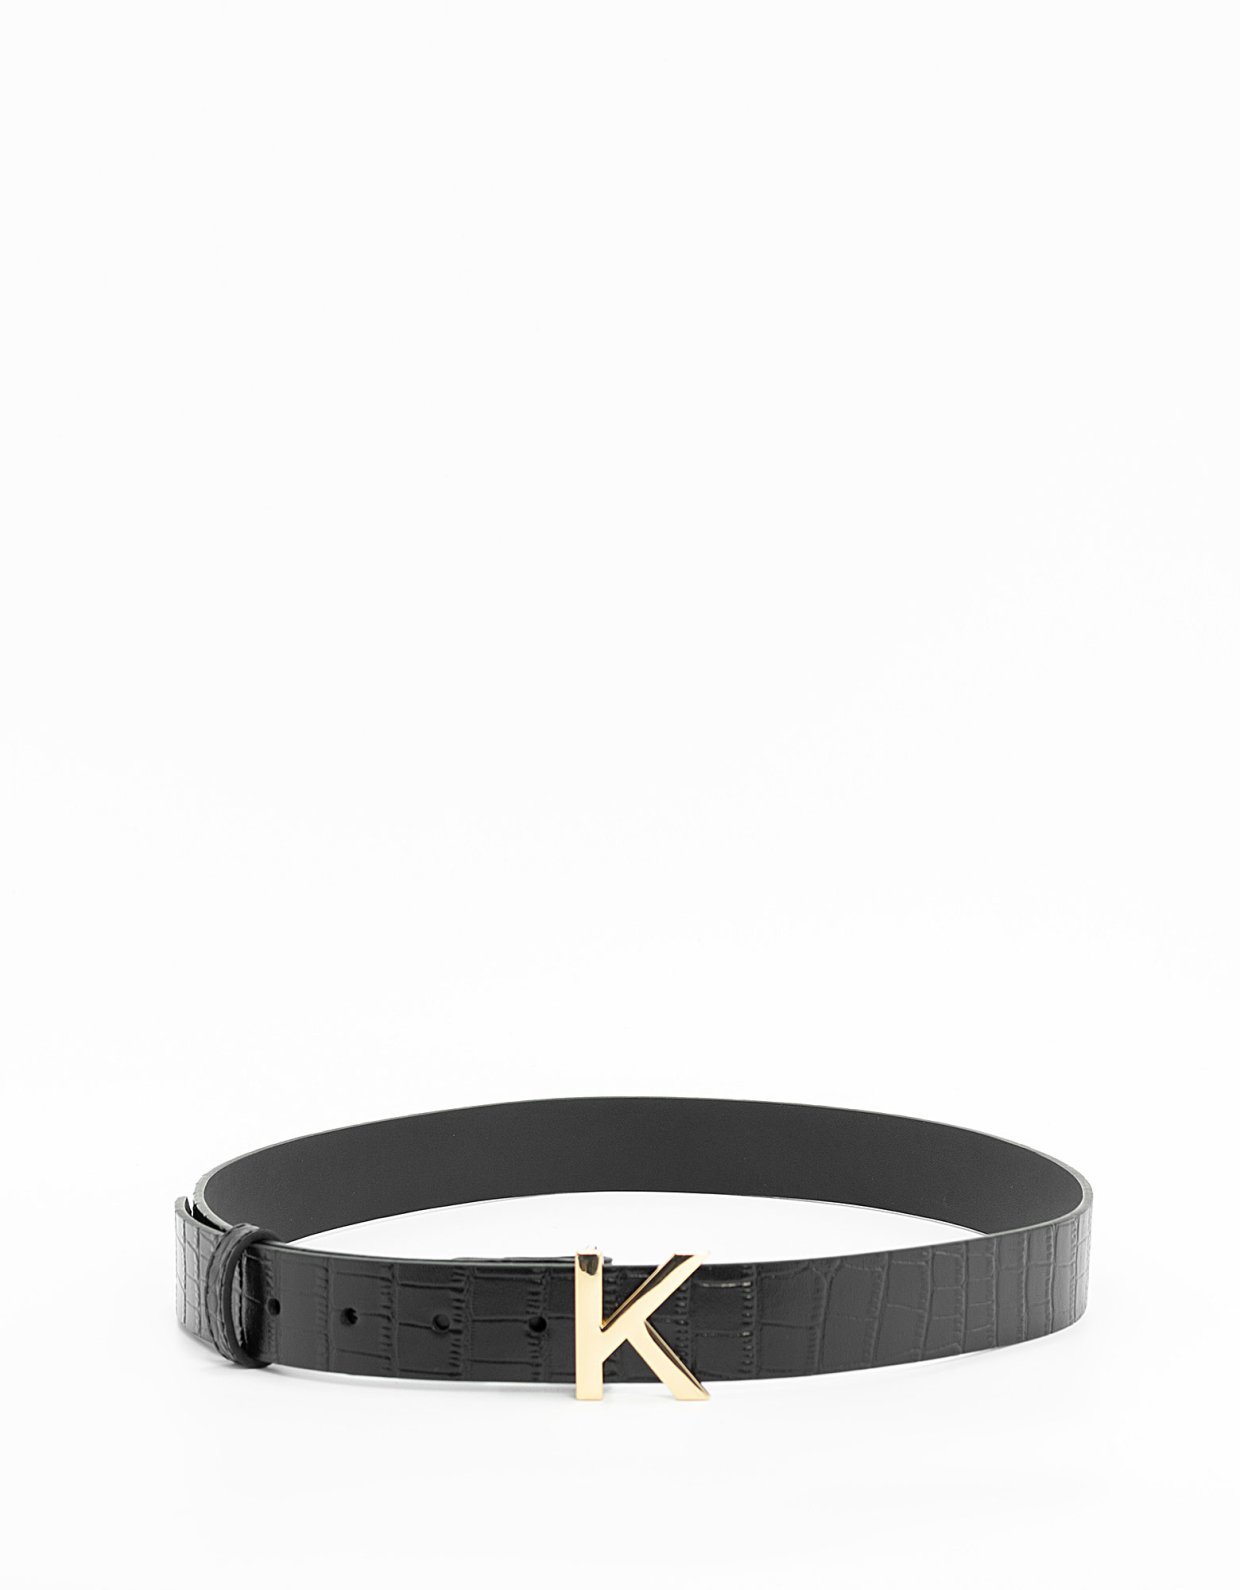 Kendall + Kylie Leather croco KK belt black